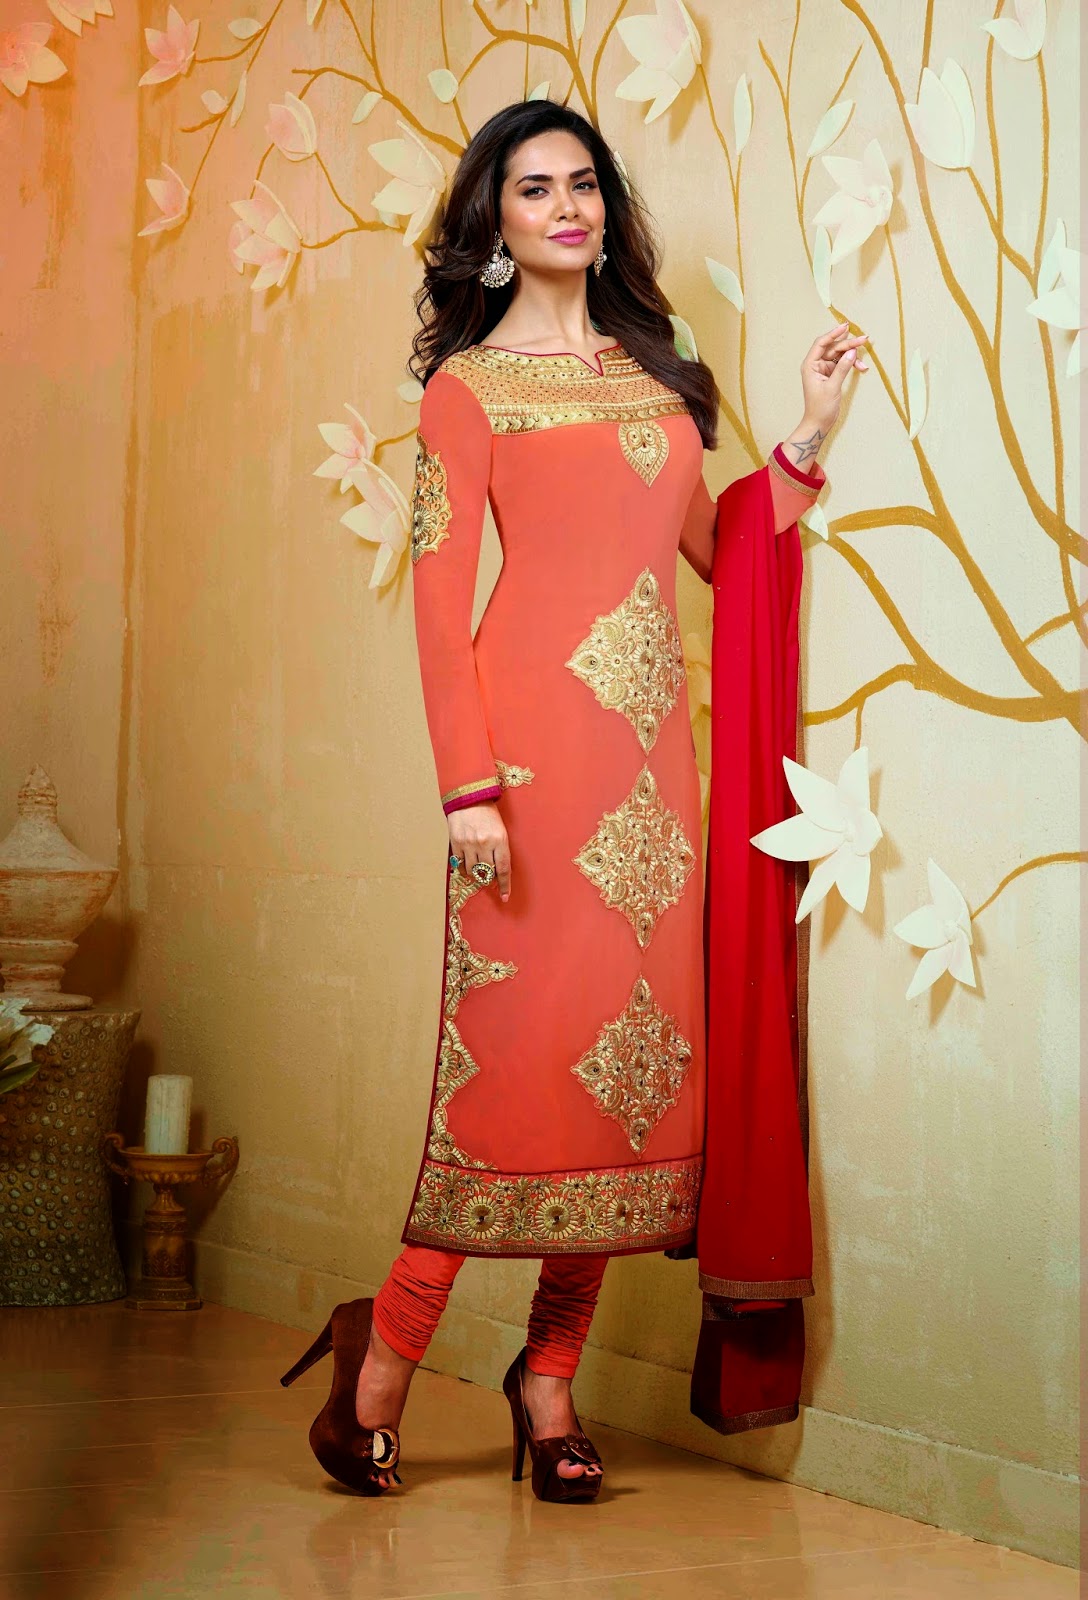 Esha Gupta Anarkali Suit Wallpapers Free Download